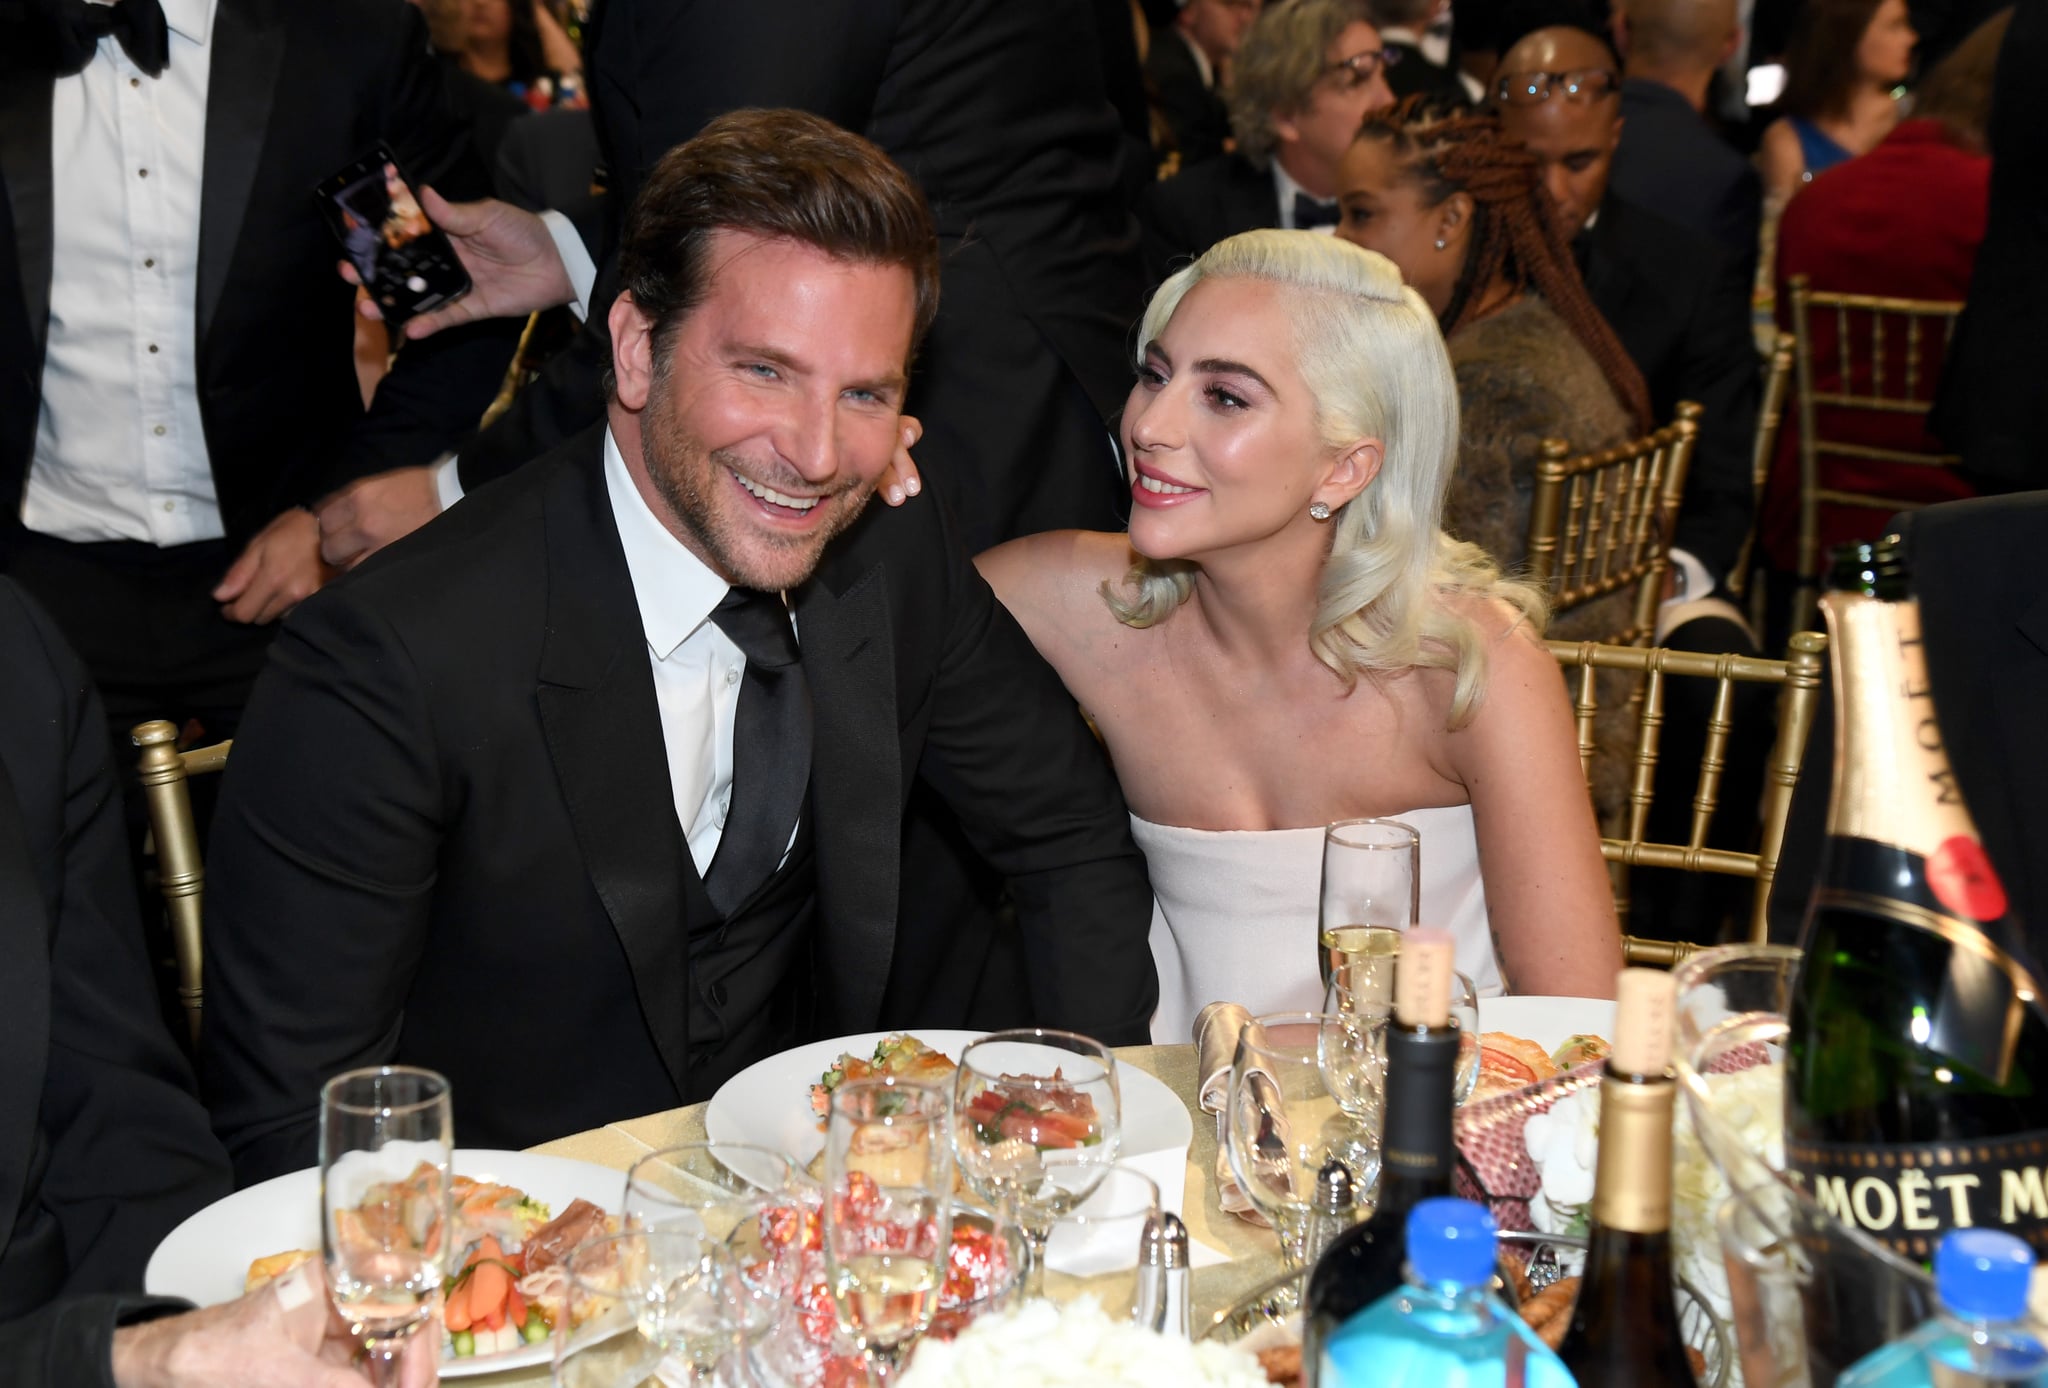 Lady Gaga's Reaction to Bradley Cooper's Oscar Snub 2019 | POPSUGAR Celebrity2048 x 1388